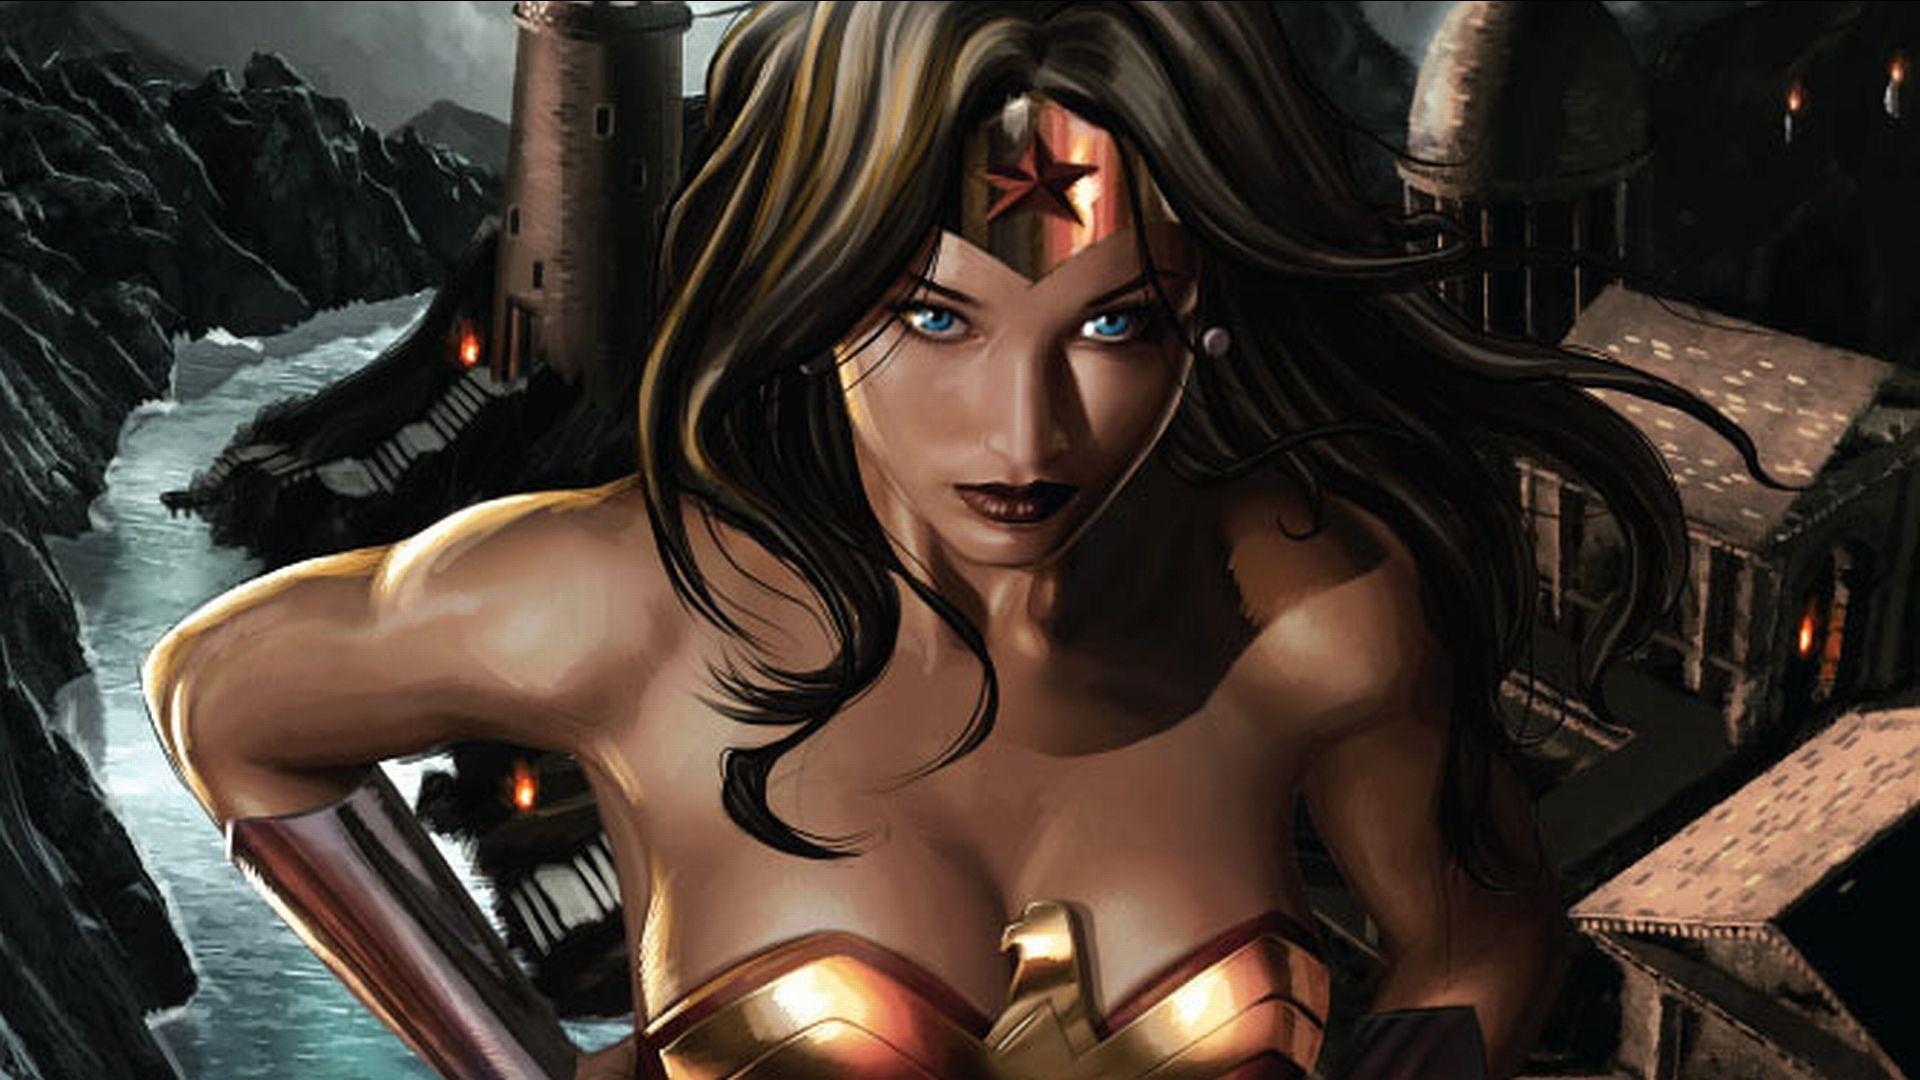 Wonder Woman HD Wallpaper. Background